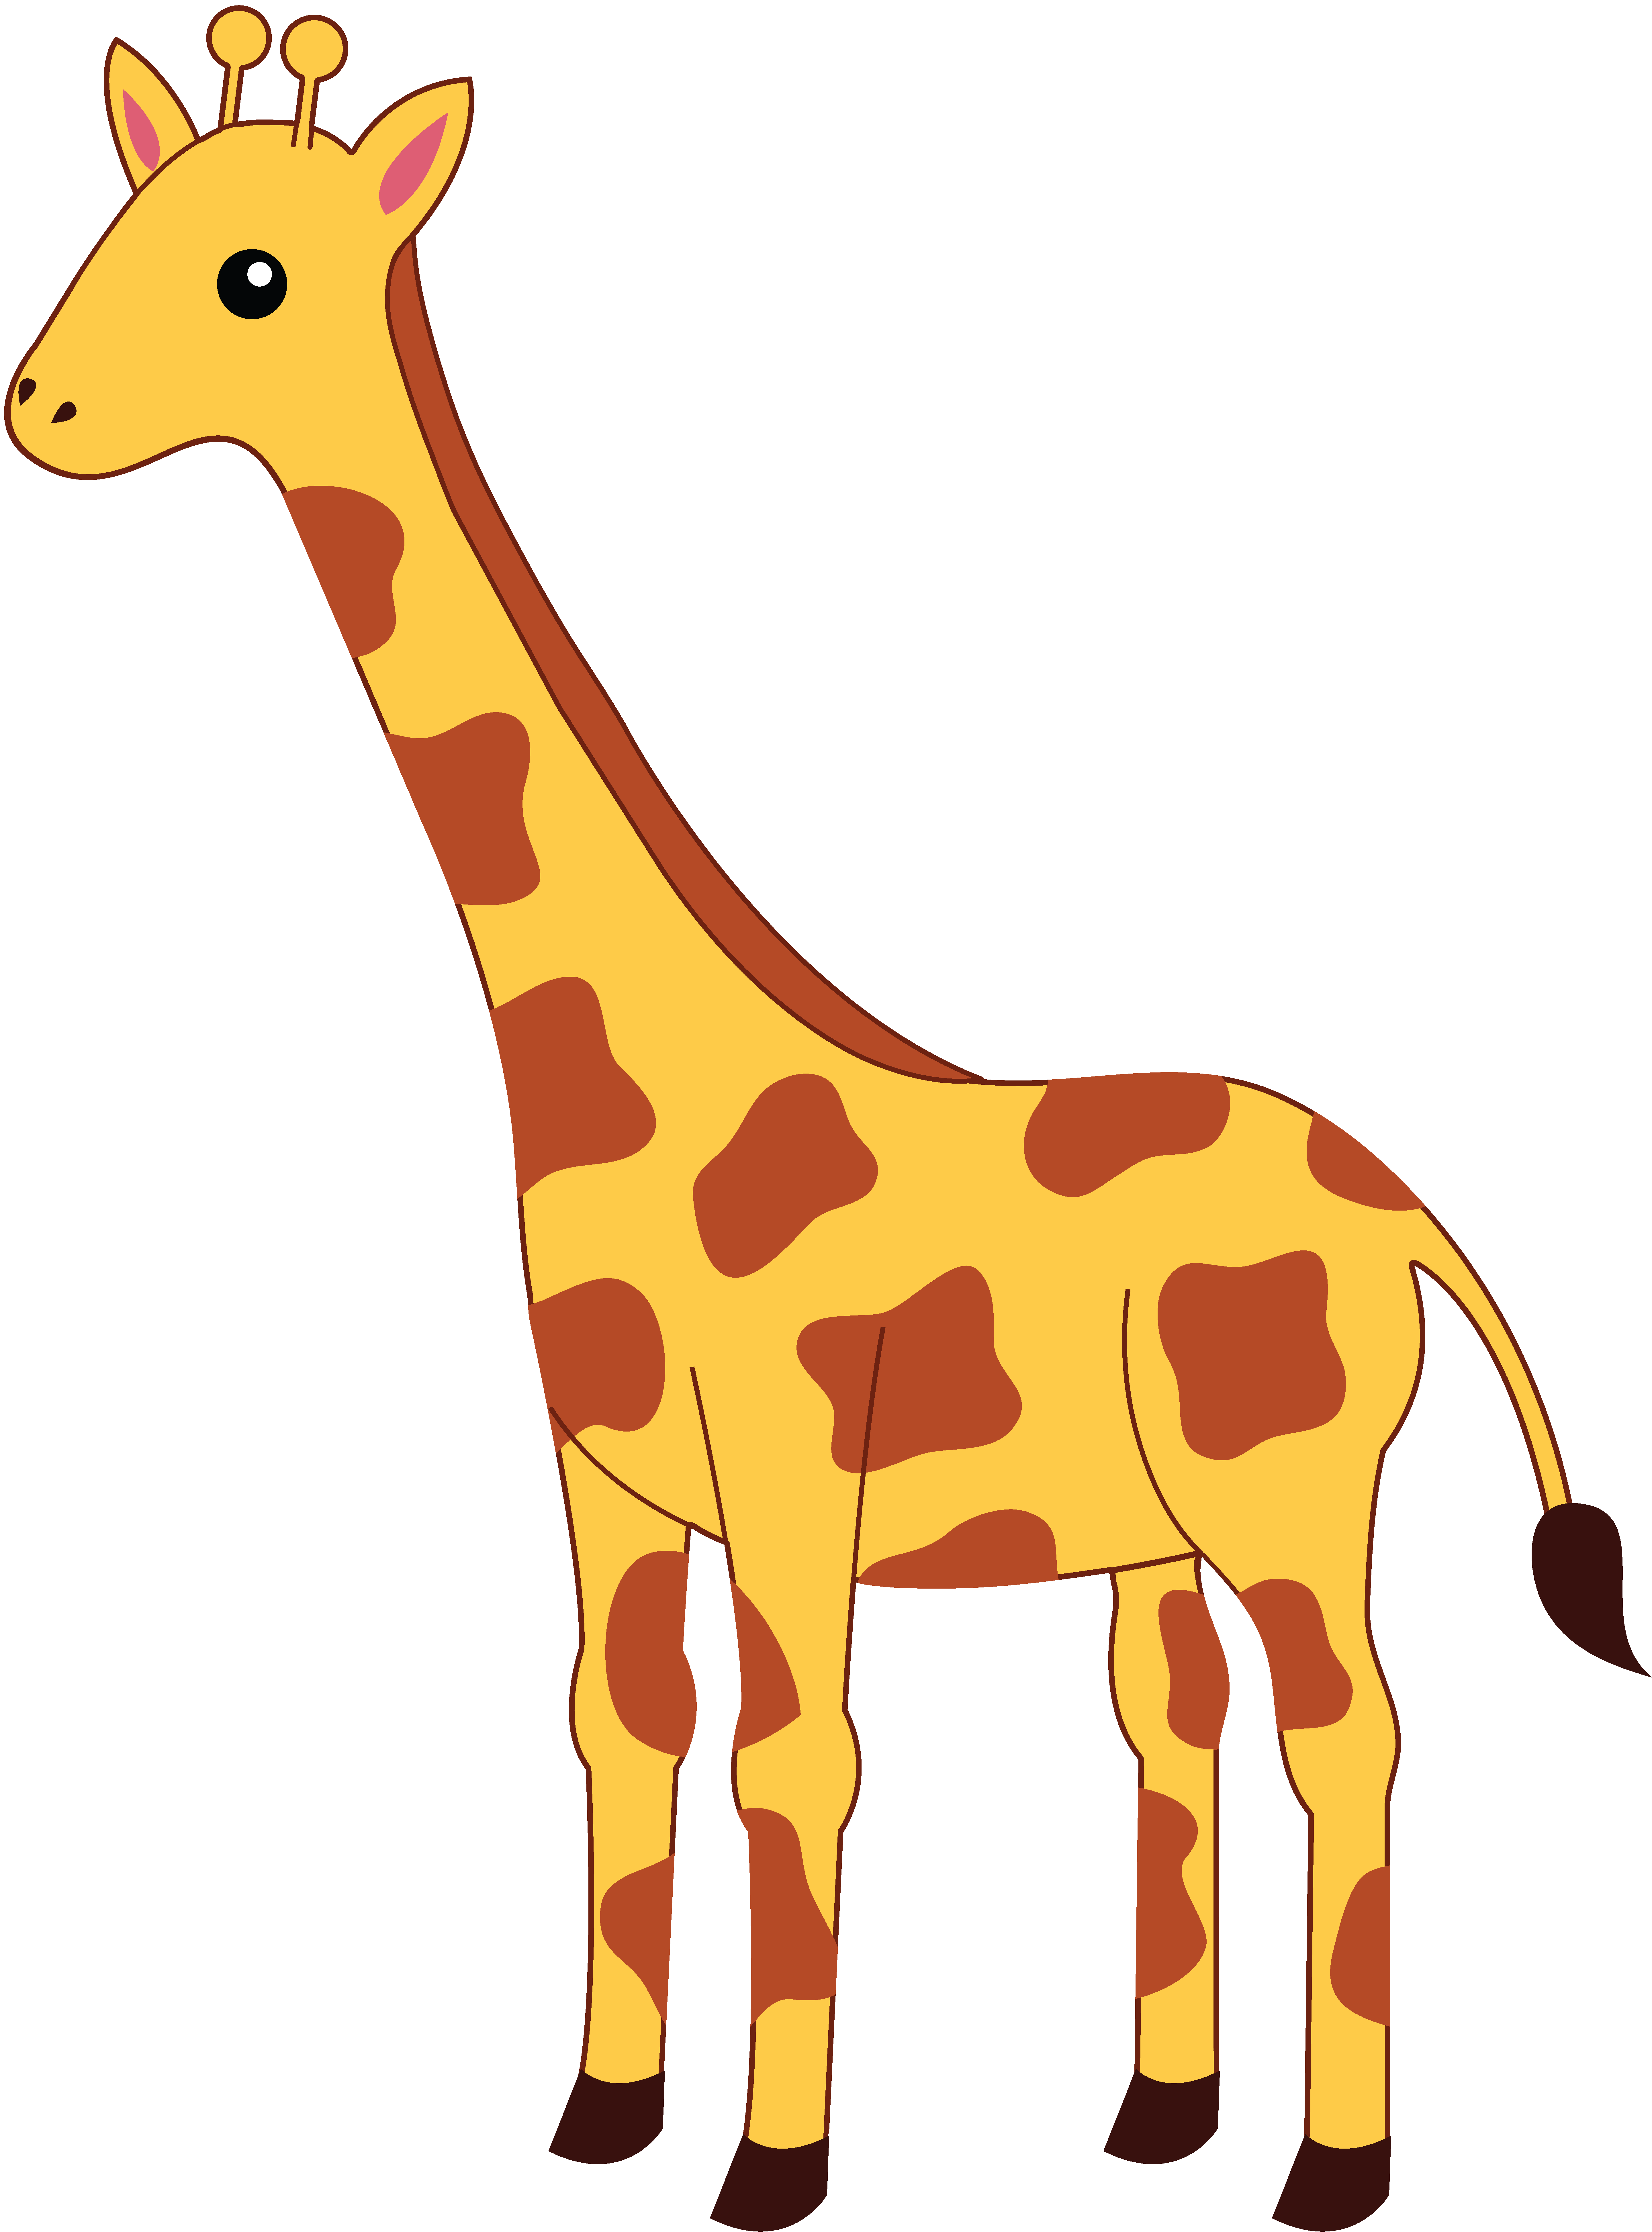 Free Giraffe Cartoon Png, Download Free Clip Art, Free Clip Art on